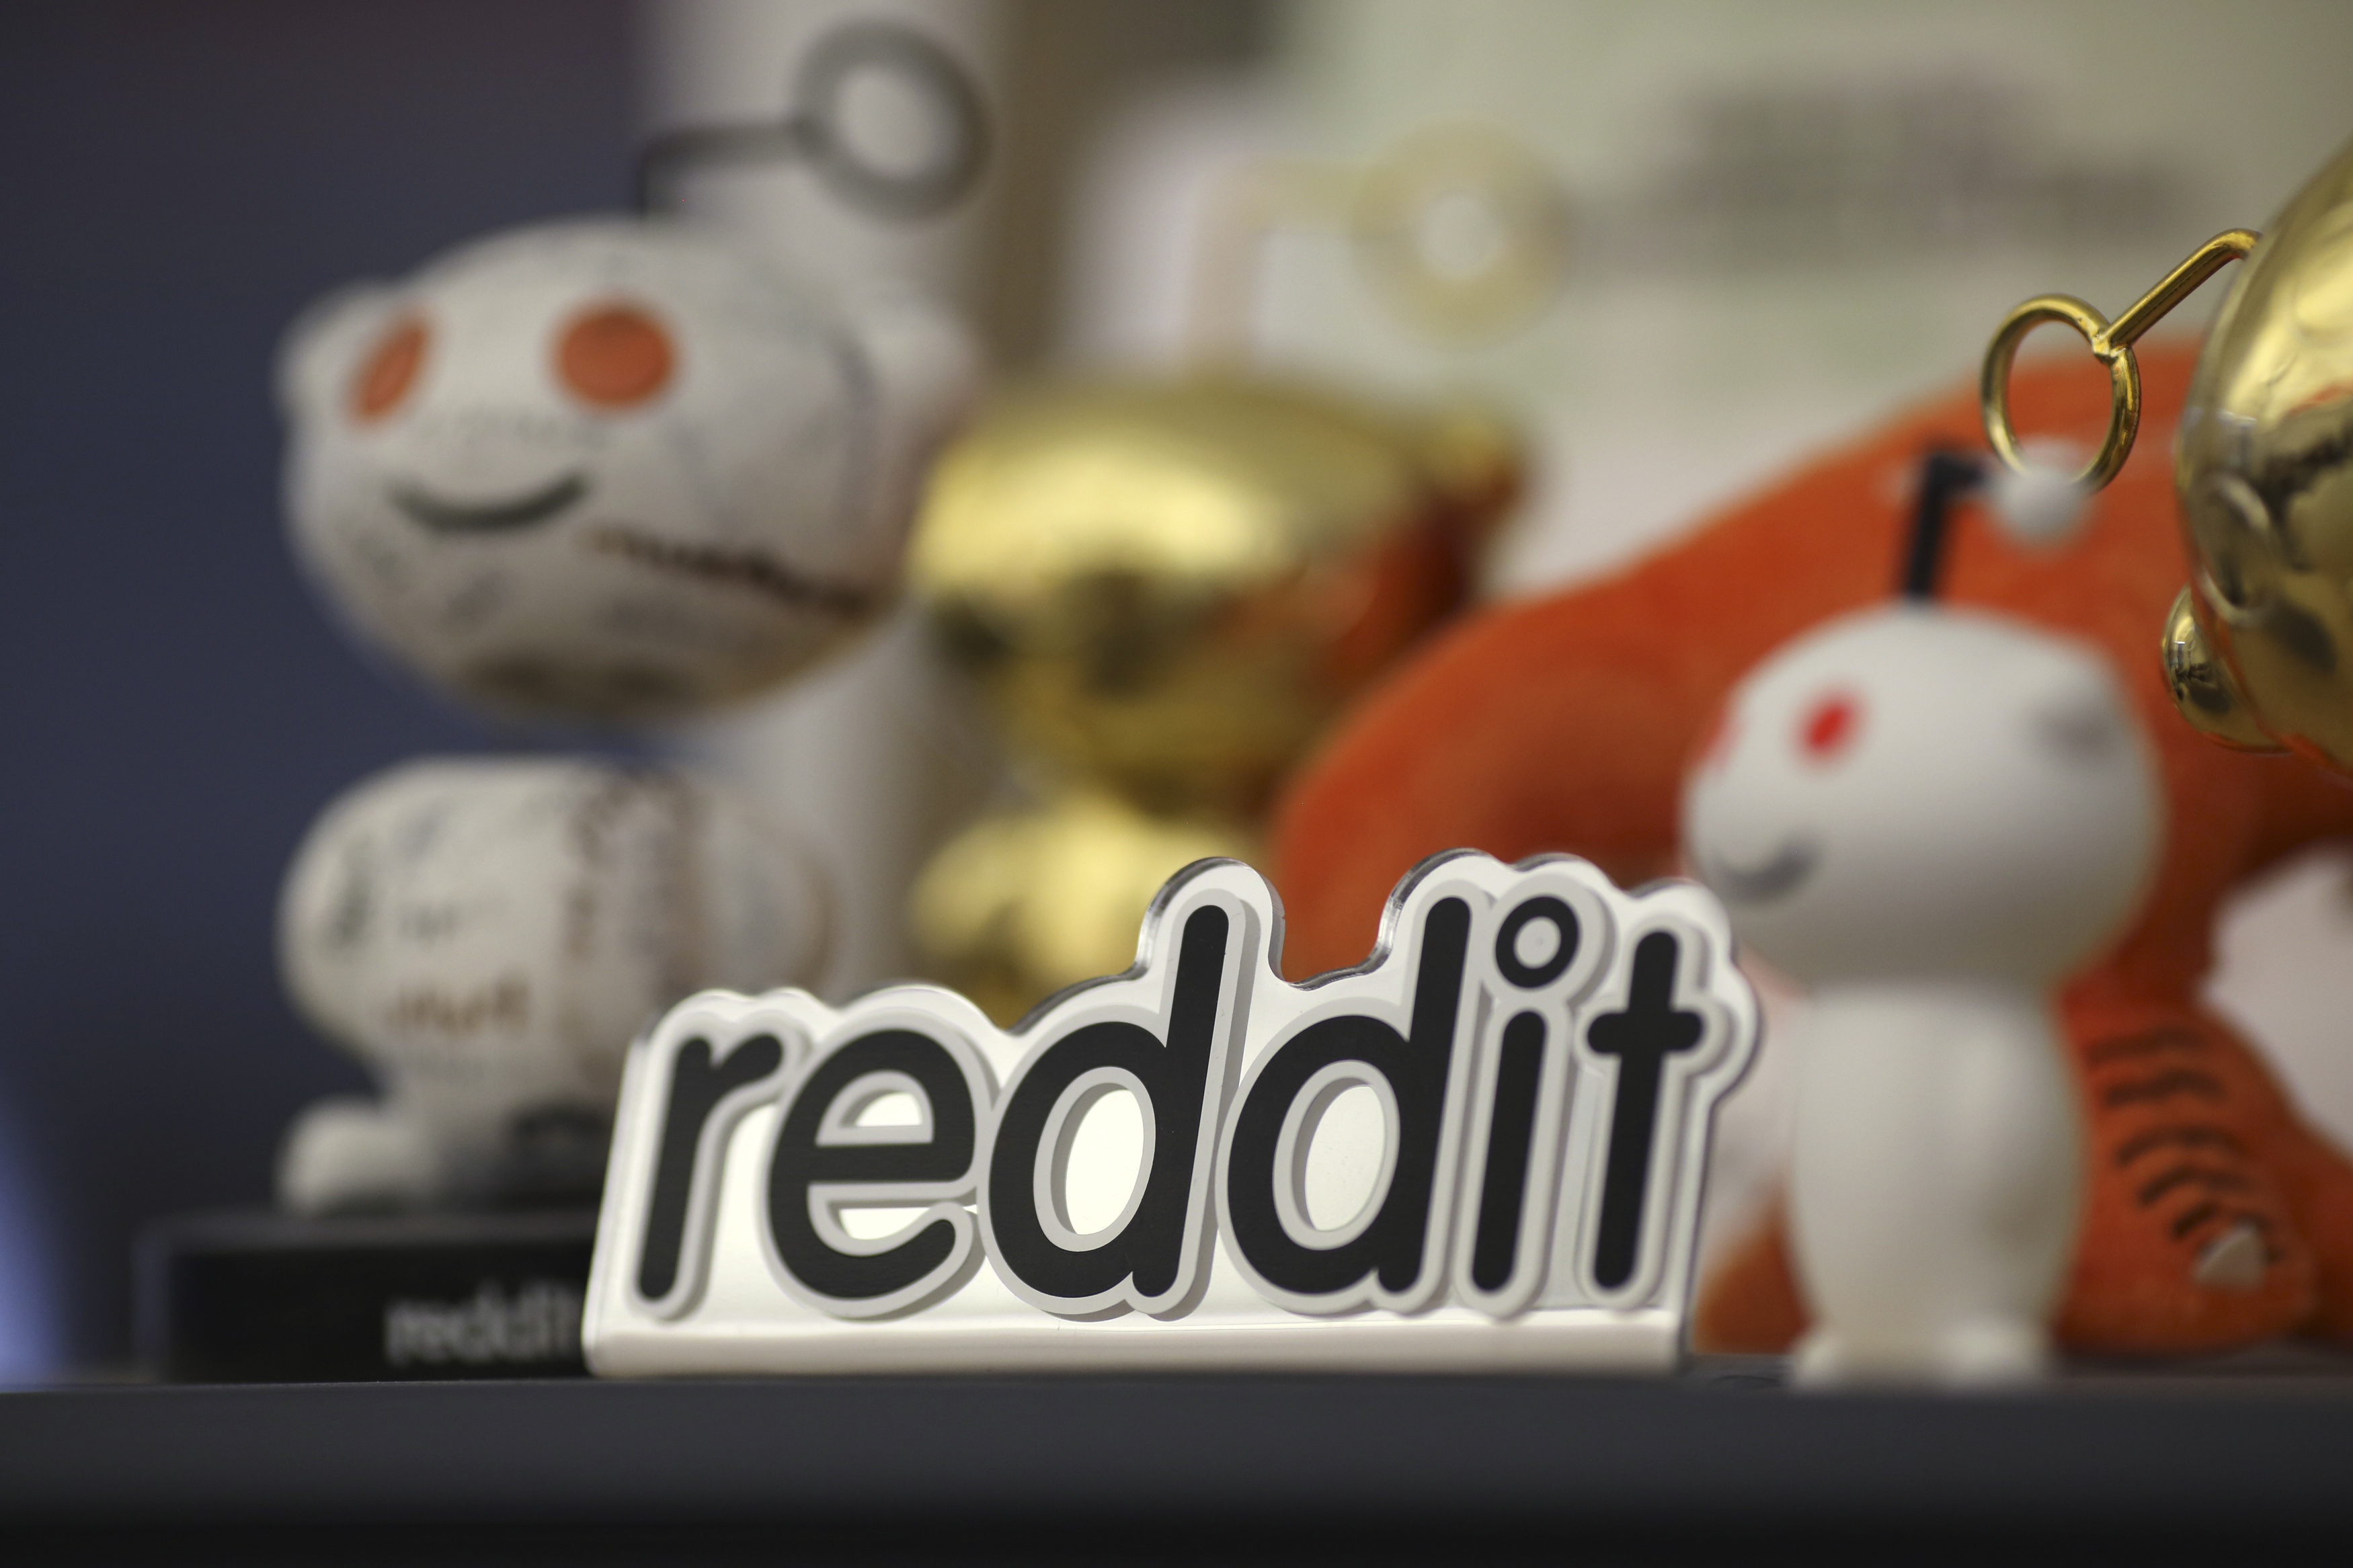 Reddit rolls out its own video platform | TechCrunch